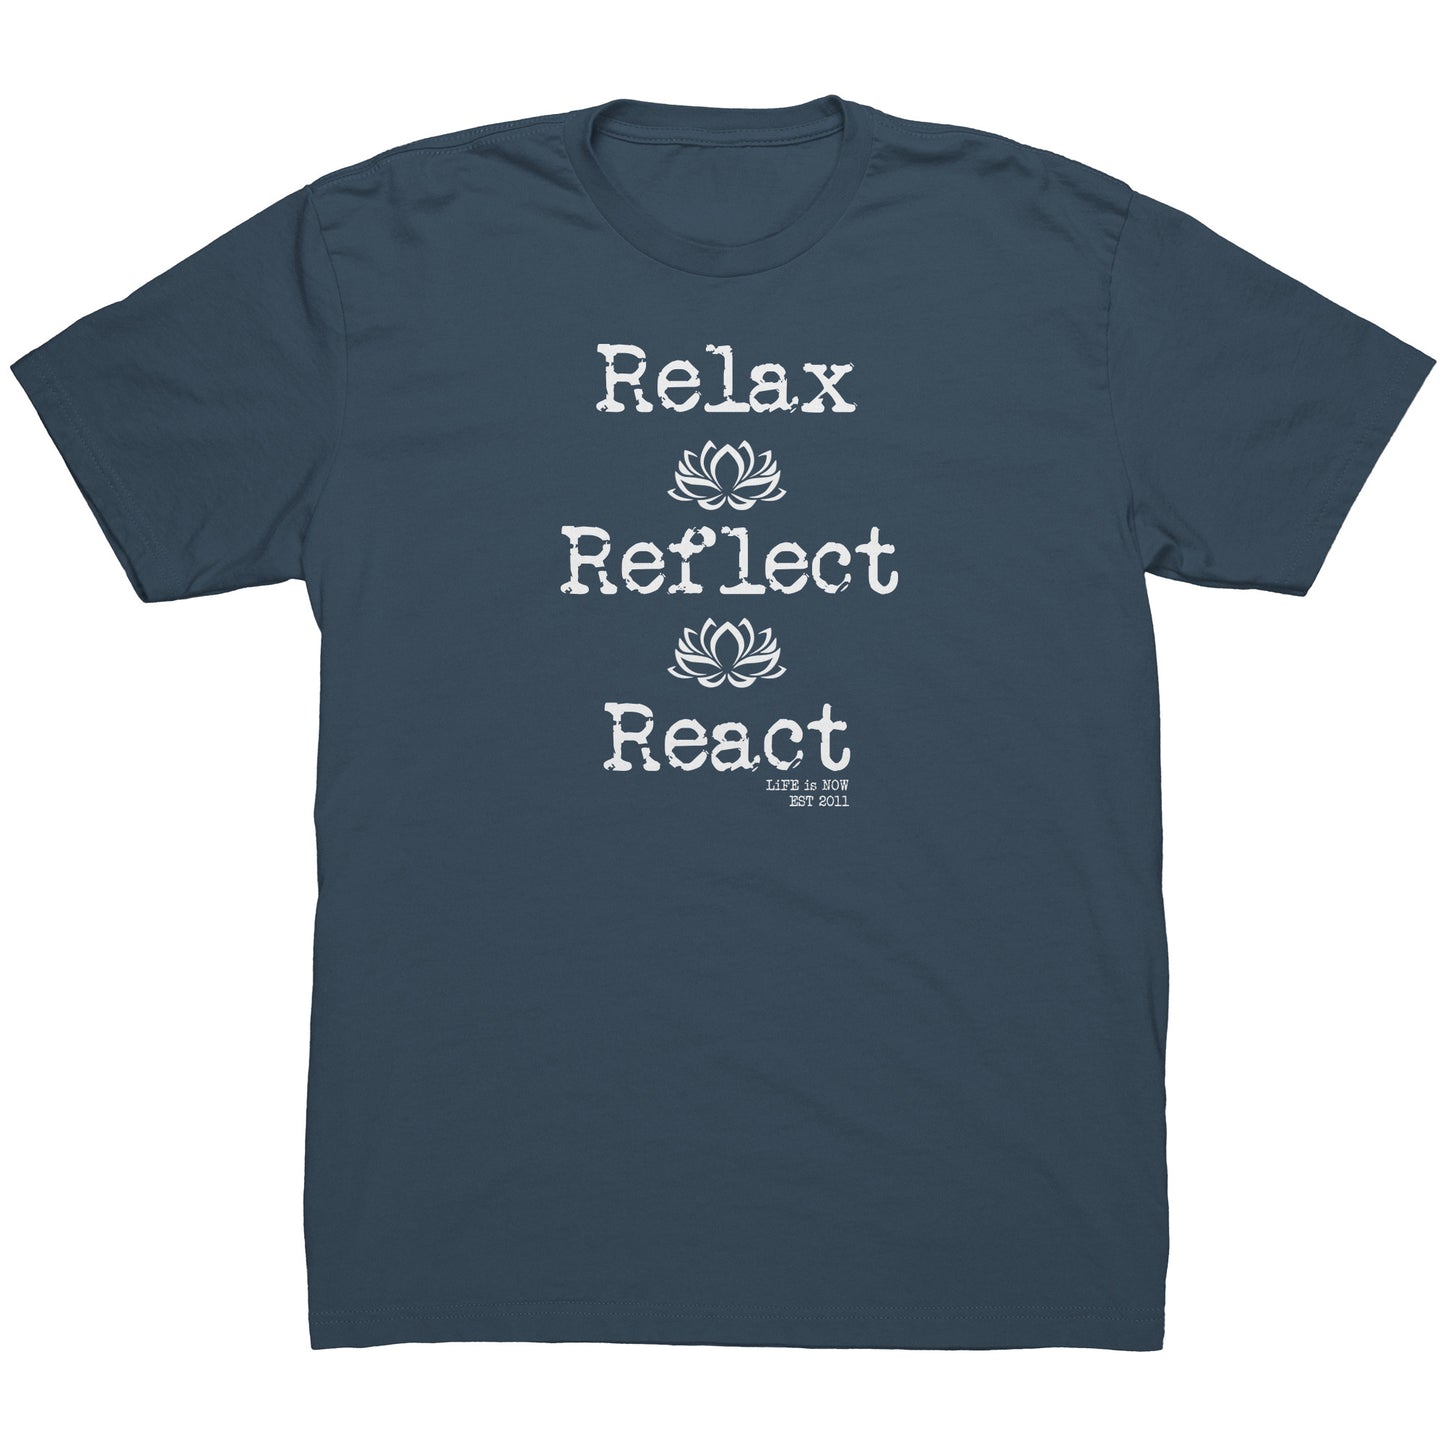 Relax Reflect React Men's Cotton Tee